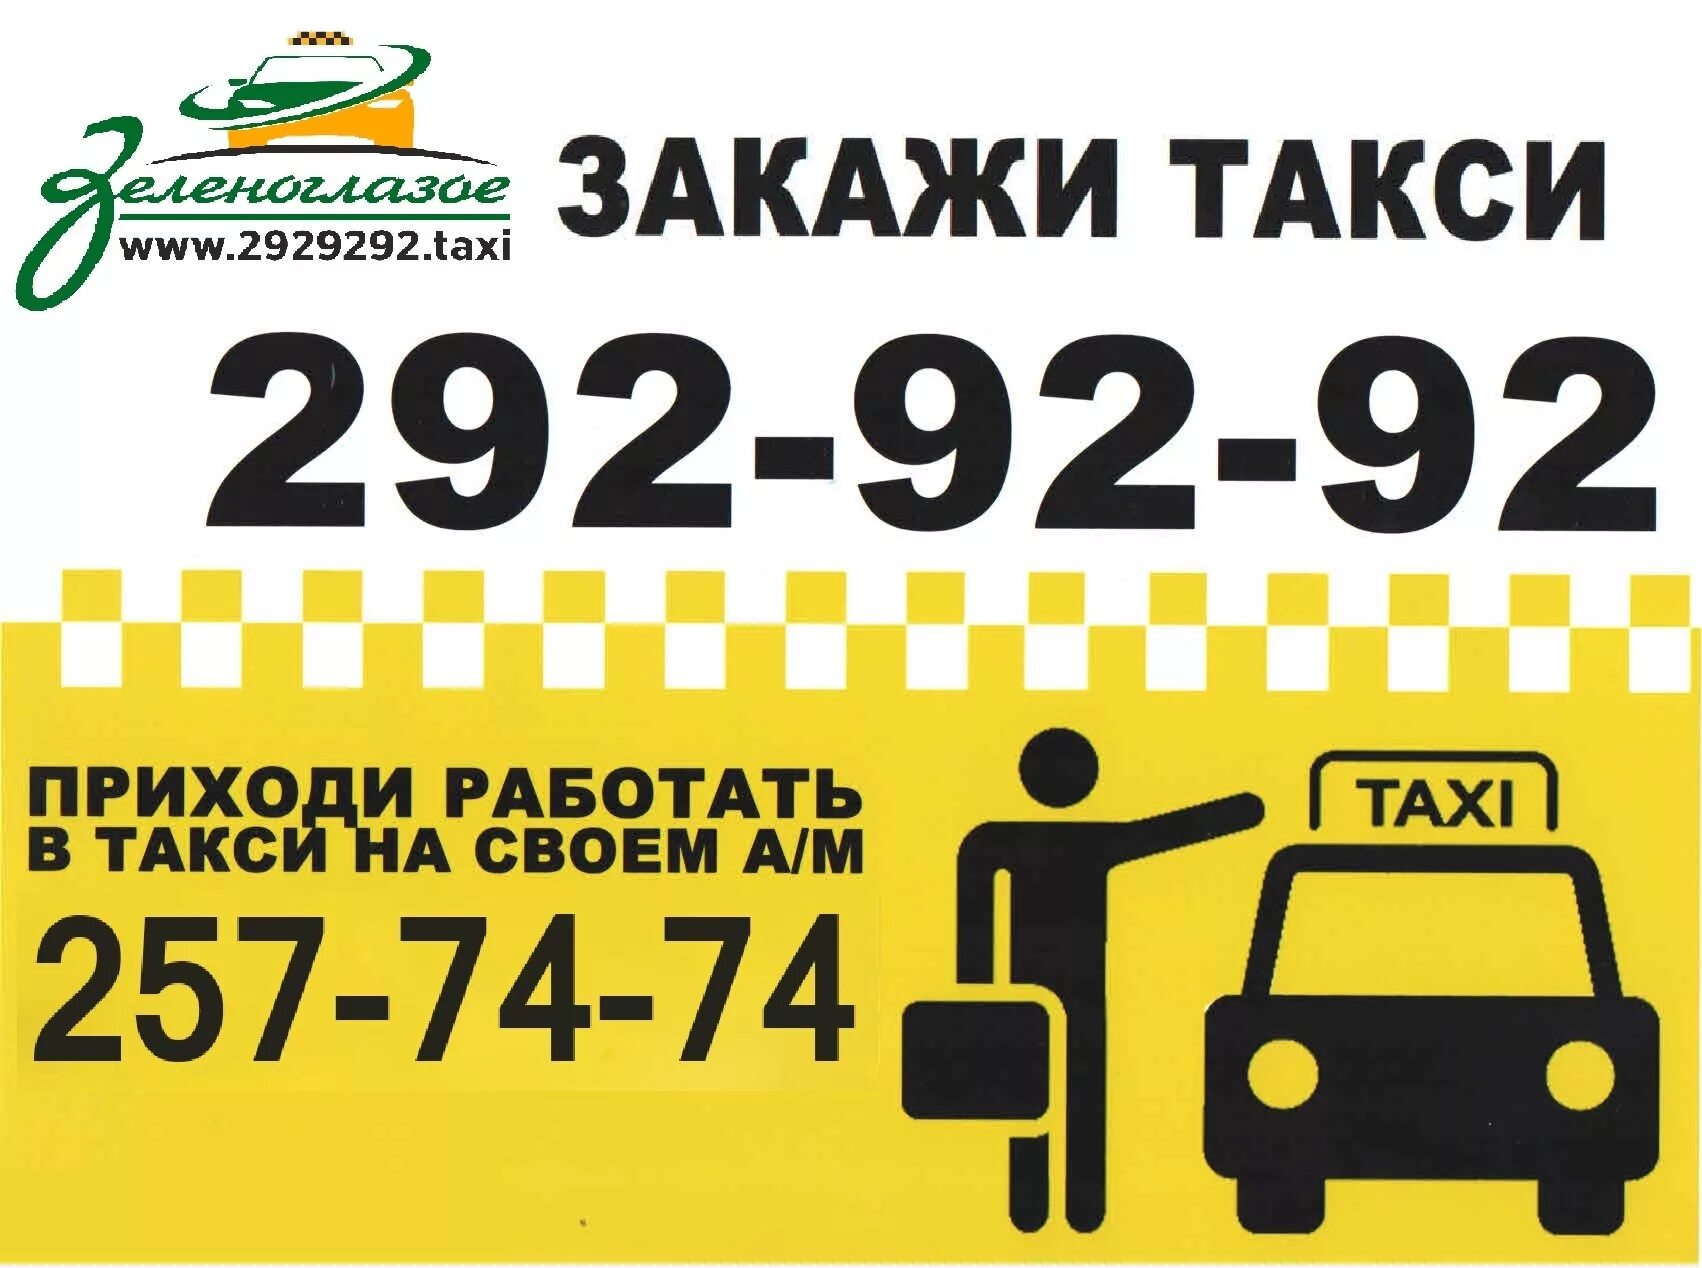 Закажи такси. Самое дешевое такси номер. Такси Уфа. Номер недорогого такси.